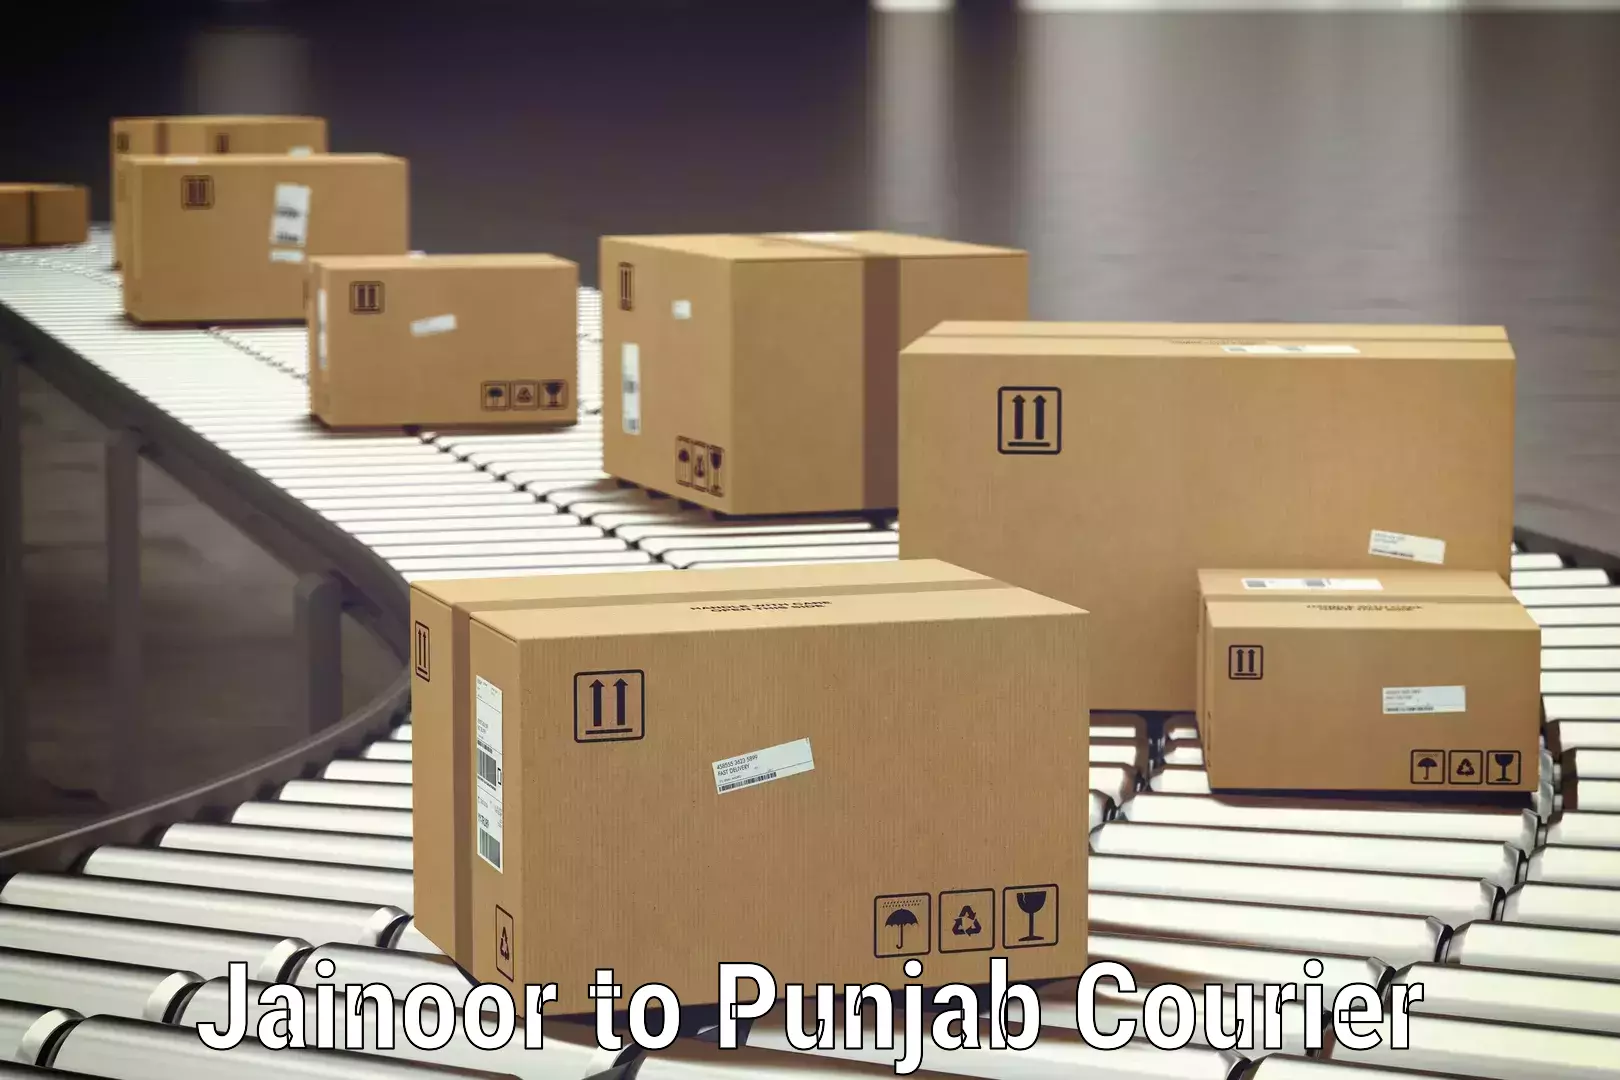 Luggage delivery network Jainoor to Punjab